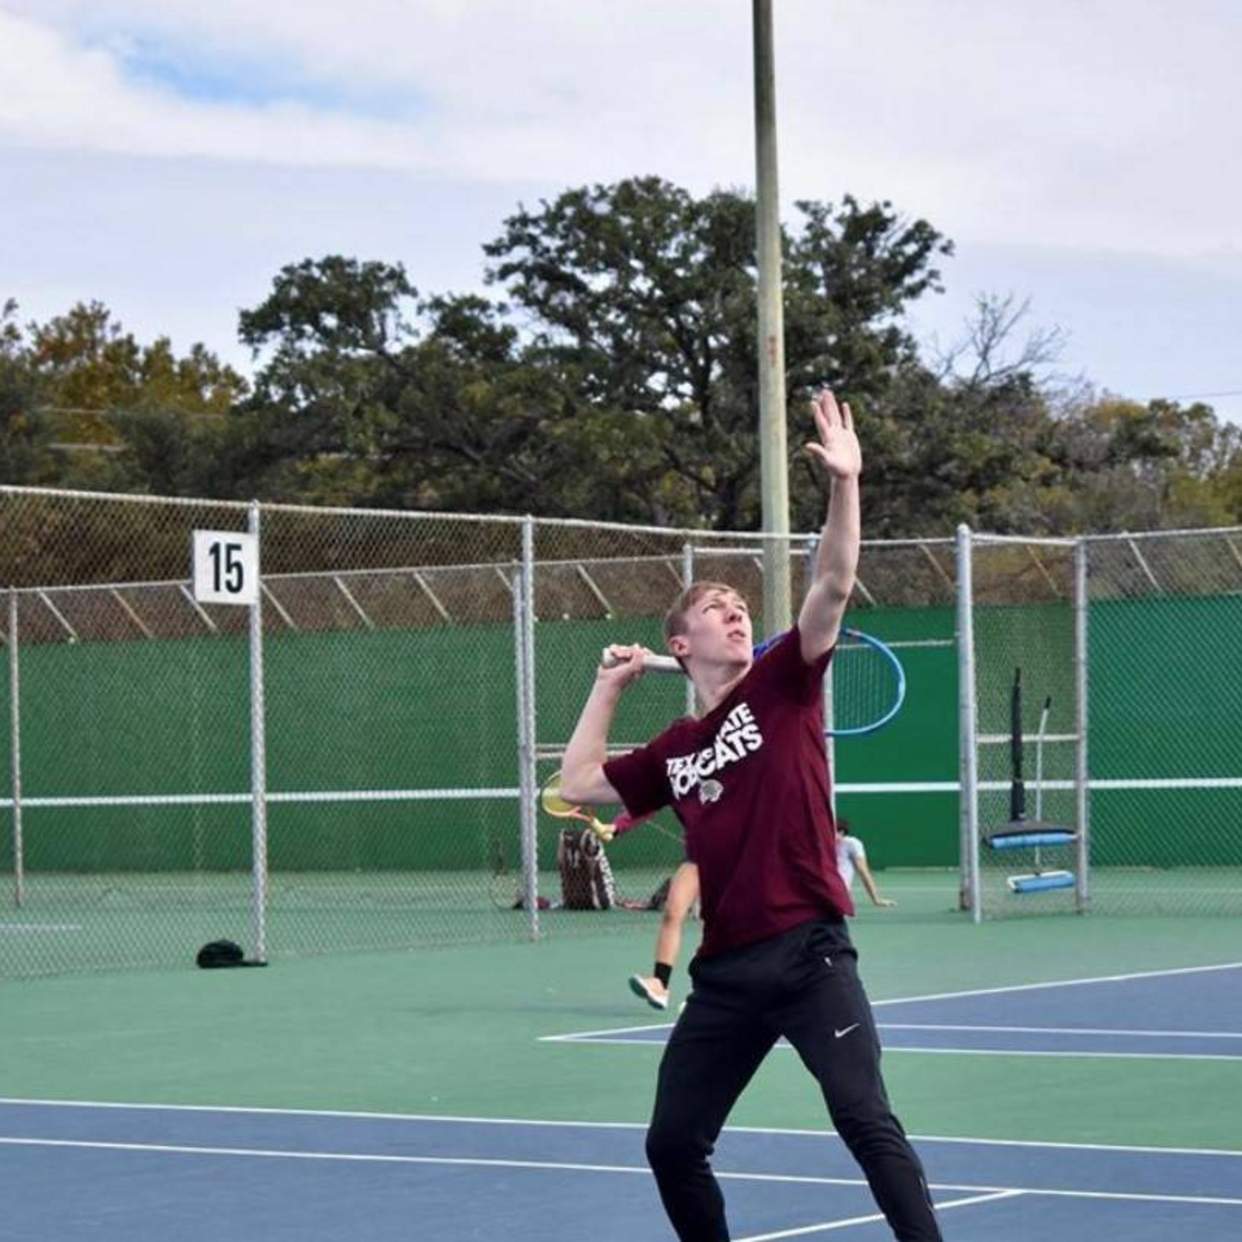 Tennis player prepares to return overhead